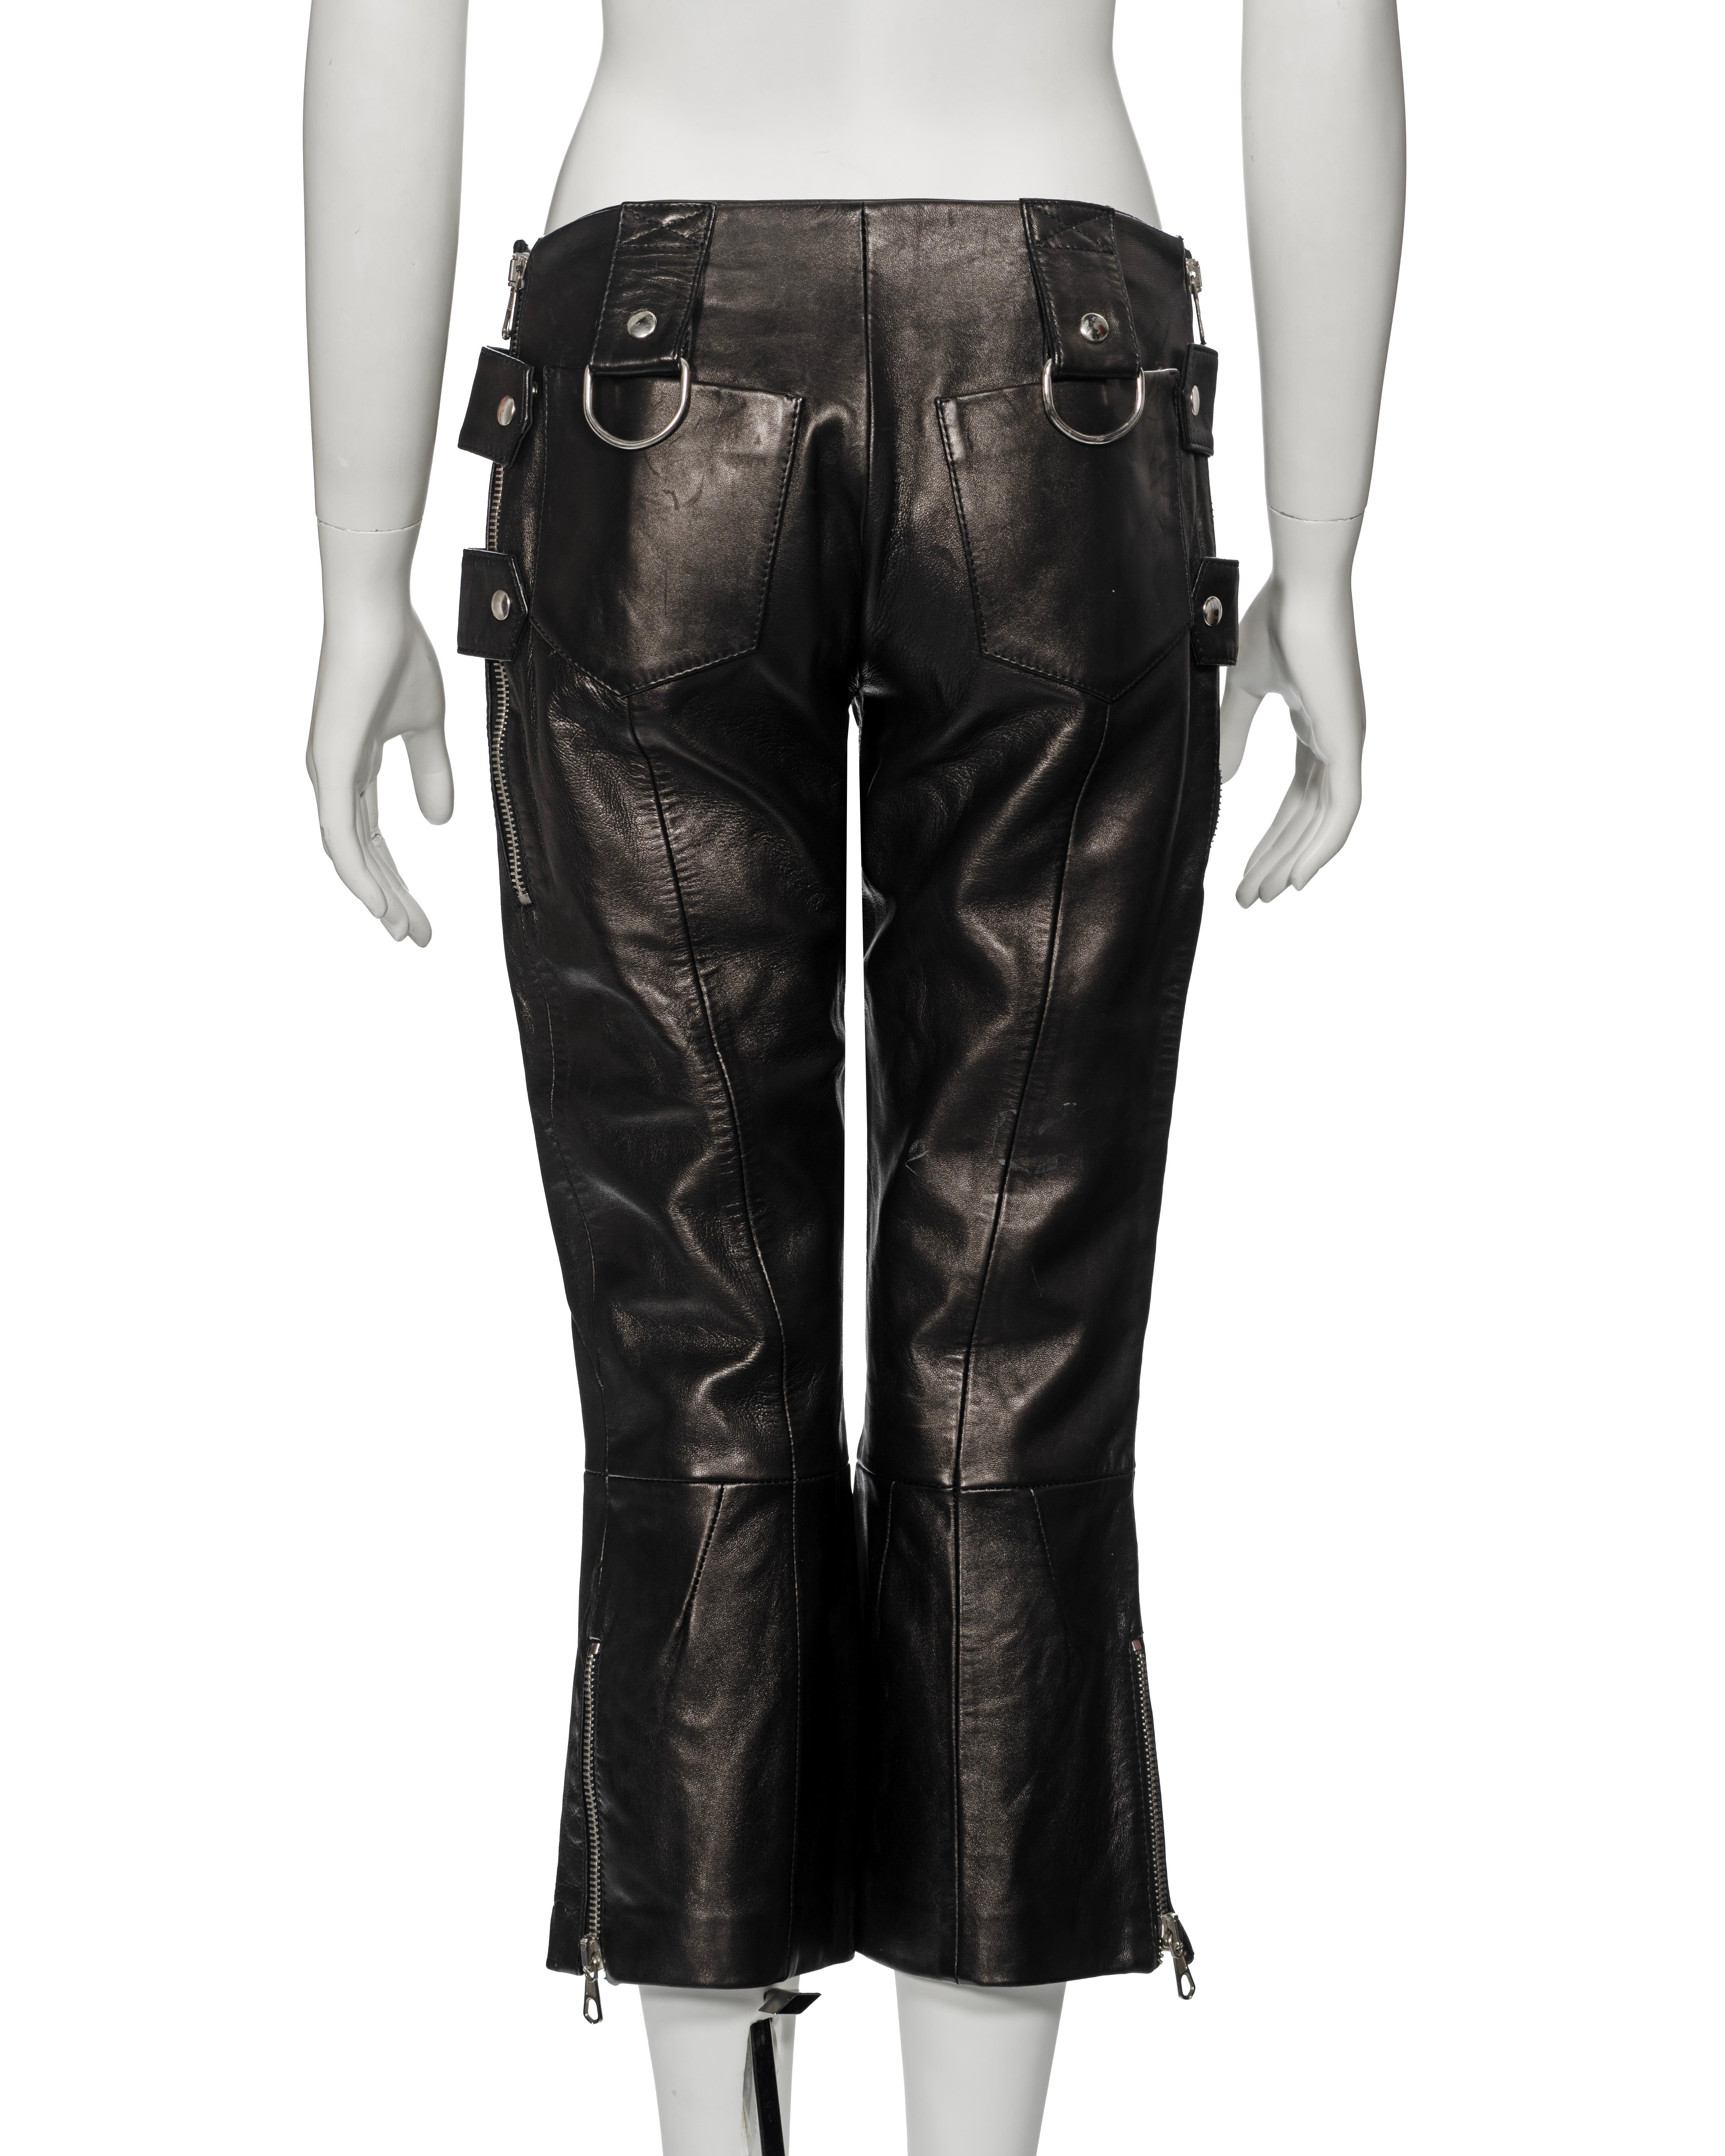 Dolce & Gabbana Black Leather Capri Pants, ss 2000 For Sale 7